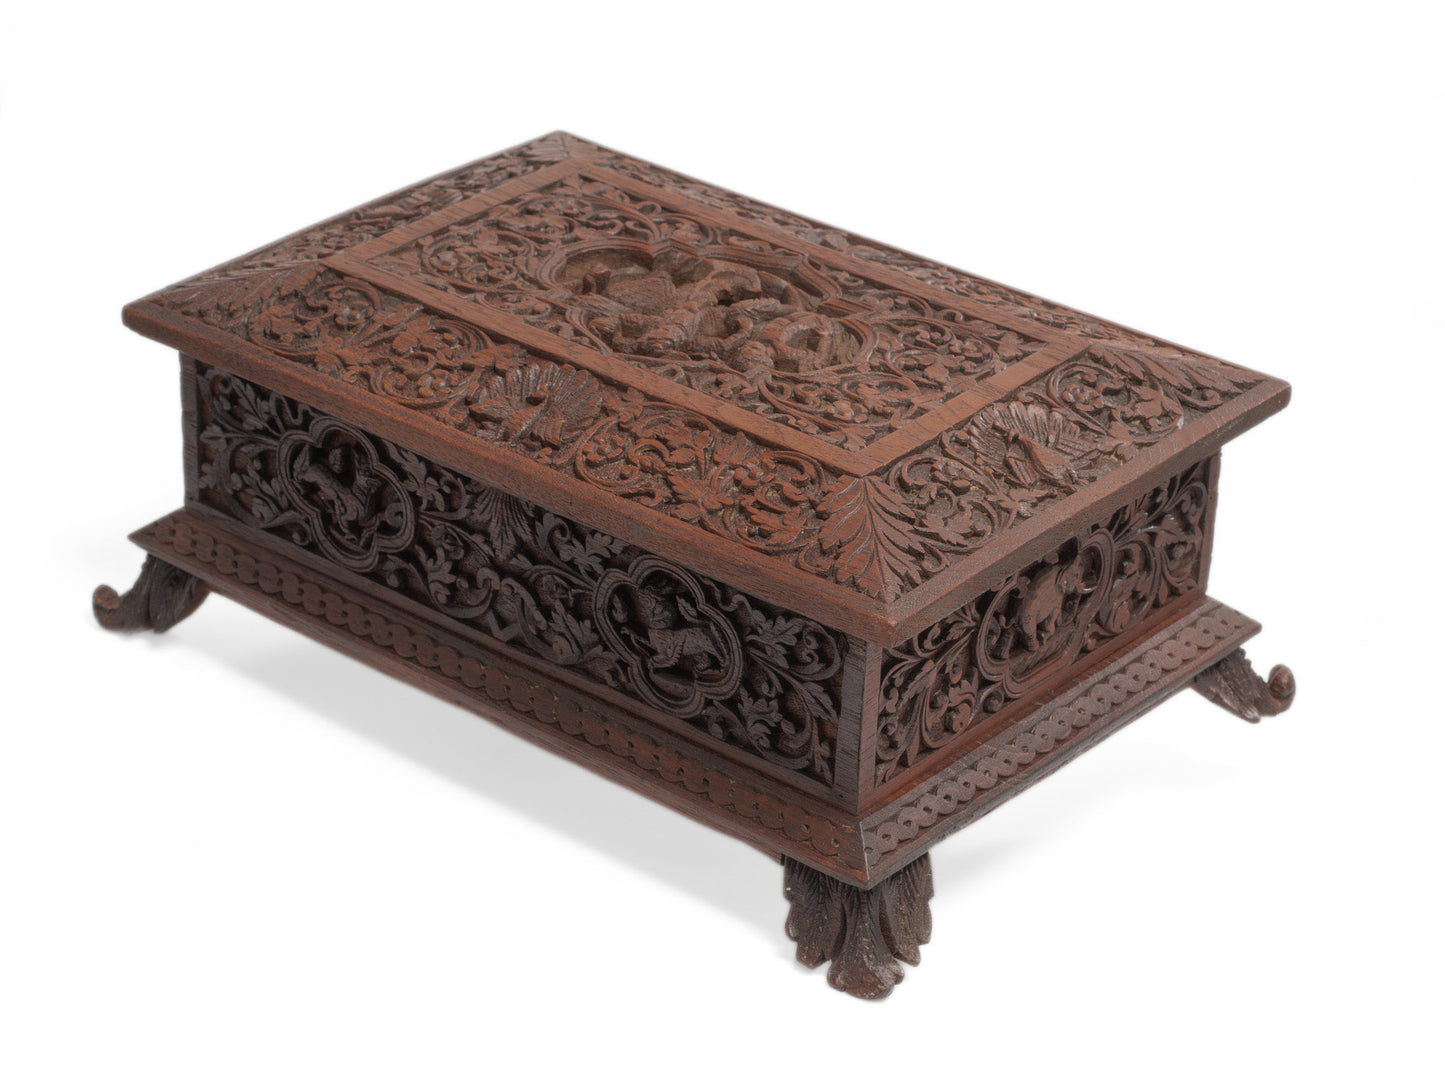 Antique Burmese Carved Wooden Table Box with Kinnara, Elephants & Peacocks (Code 2660)